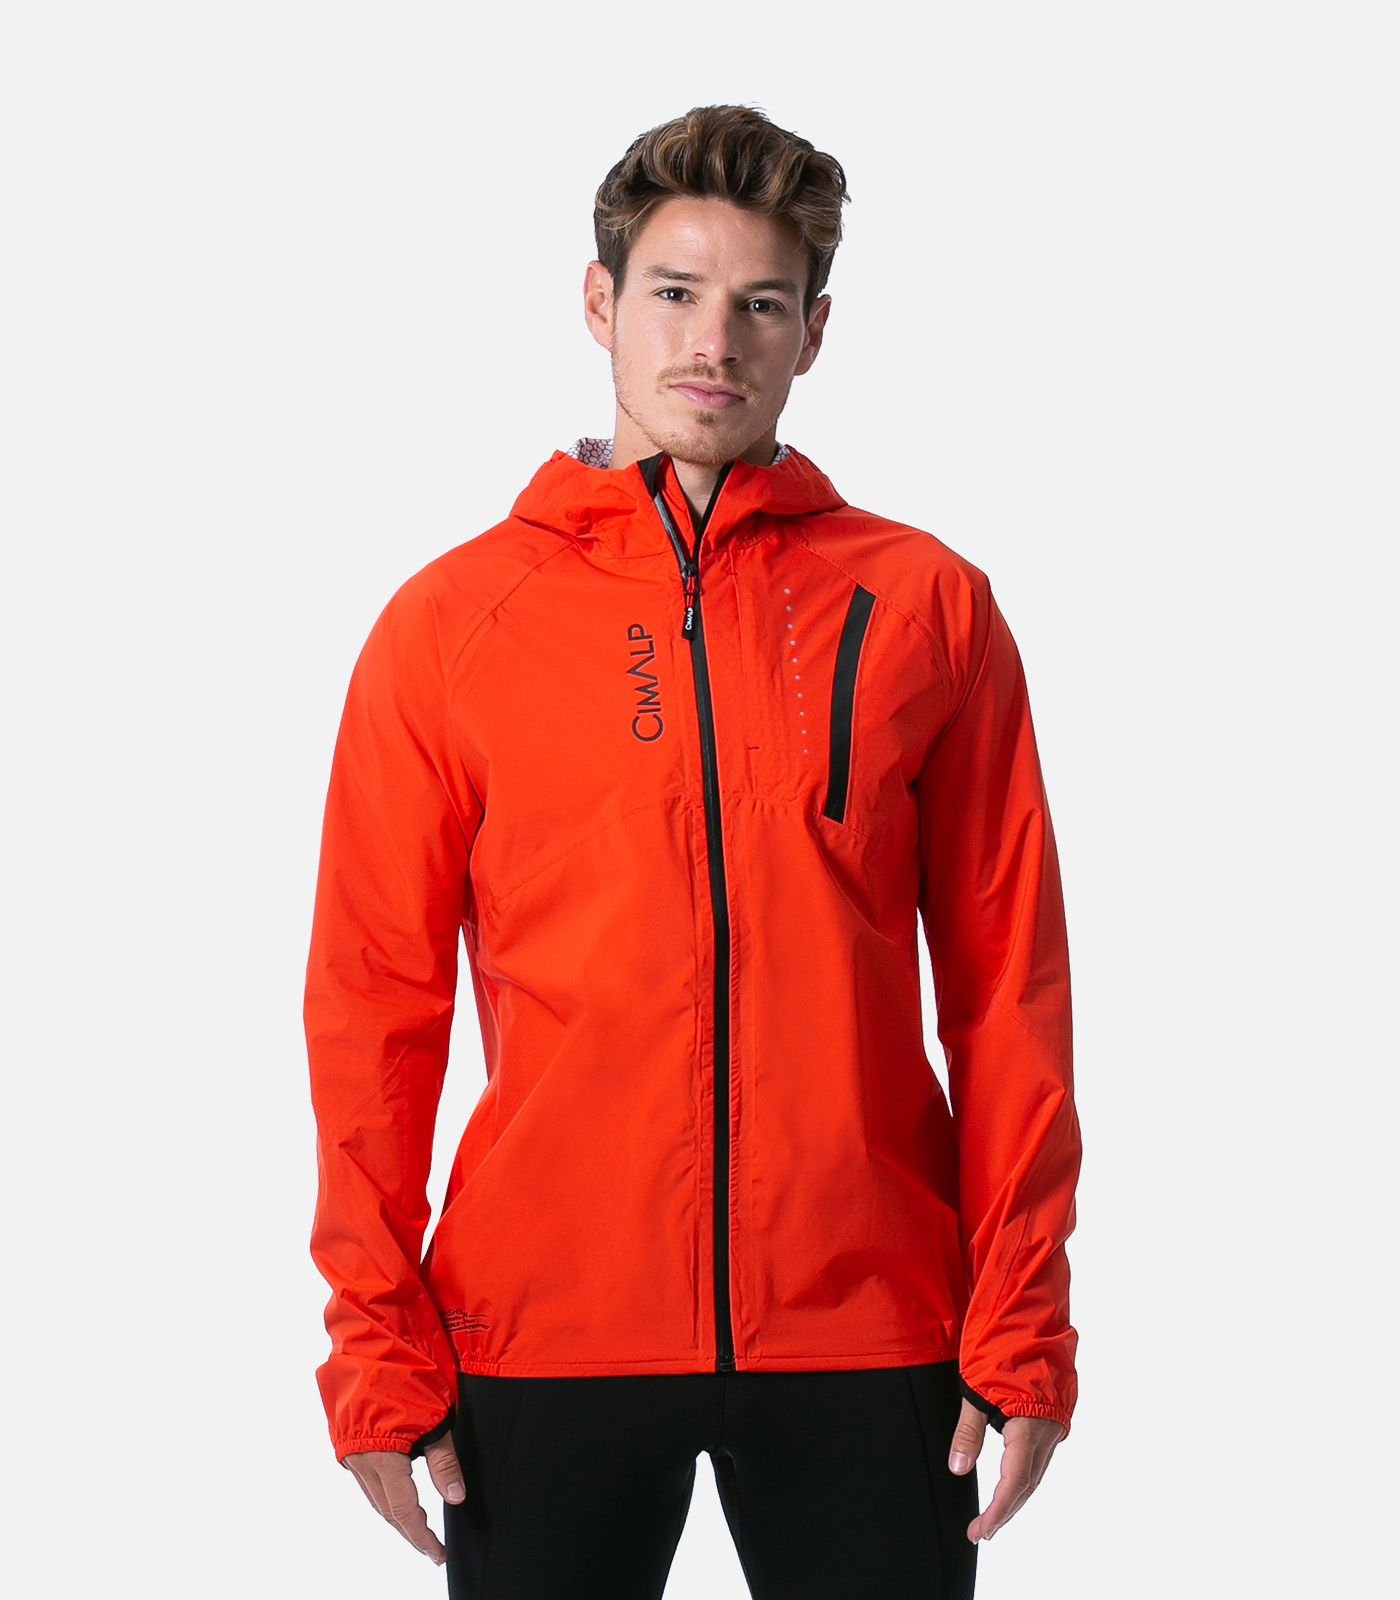 High performance Trail Running jacket